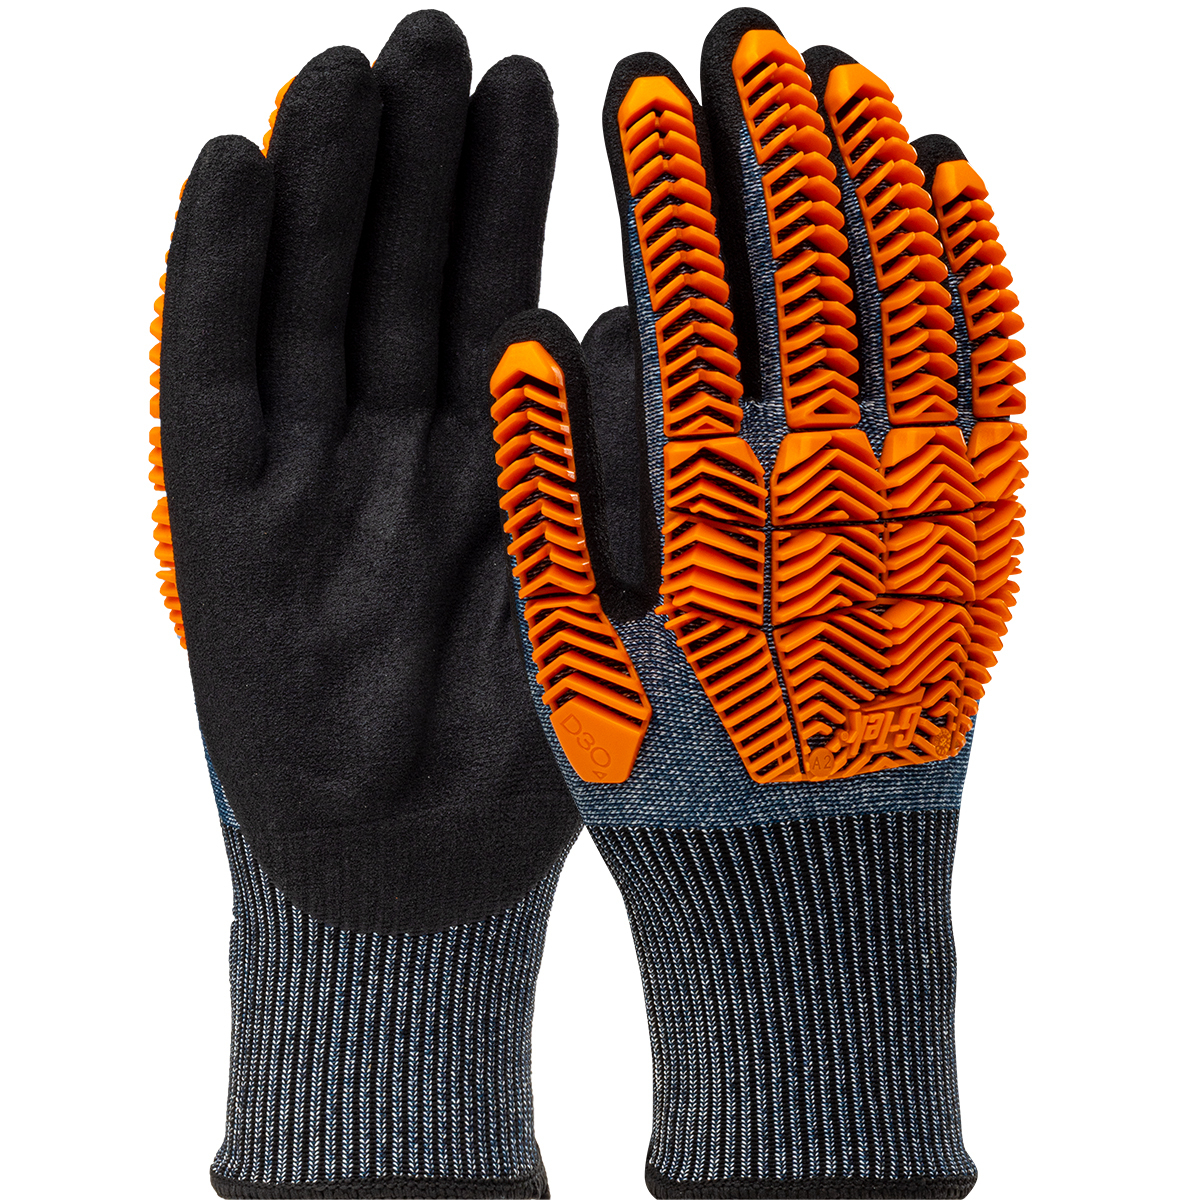 G-TEK POLYKOR D3O IMPACT GLOVE - Dorsal Impact Gloves